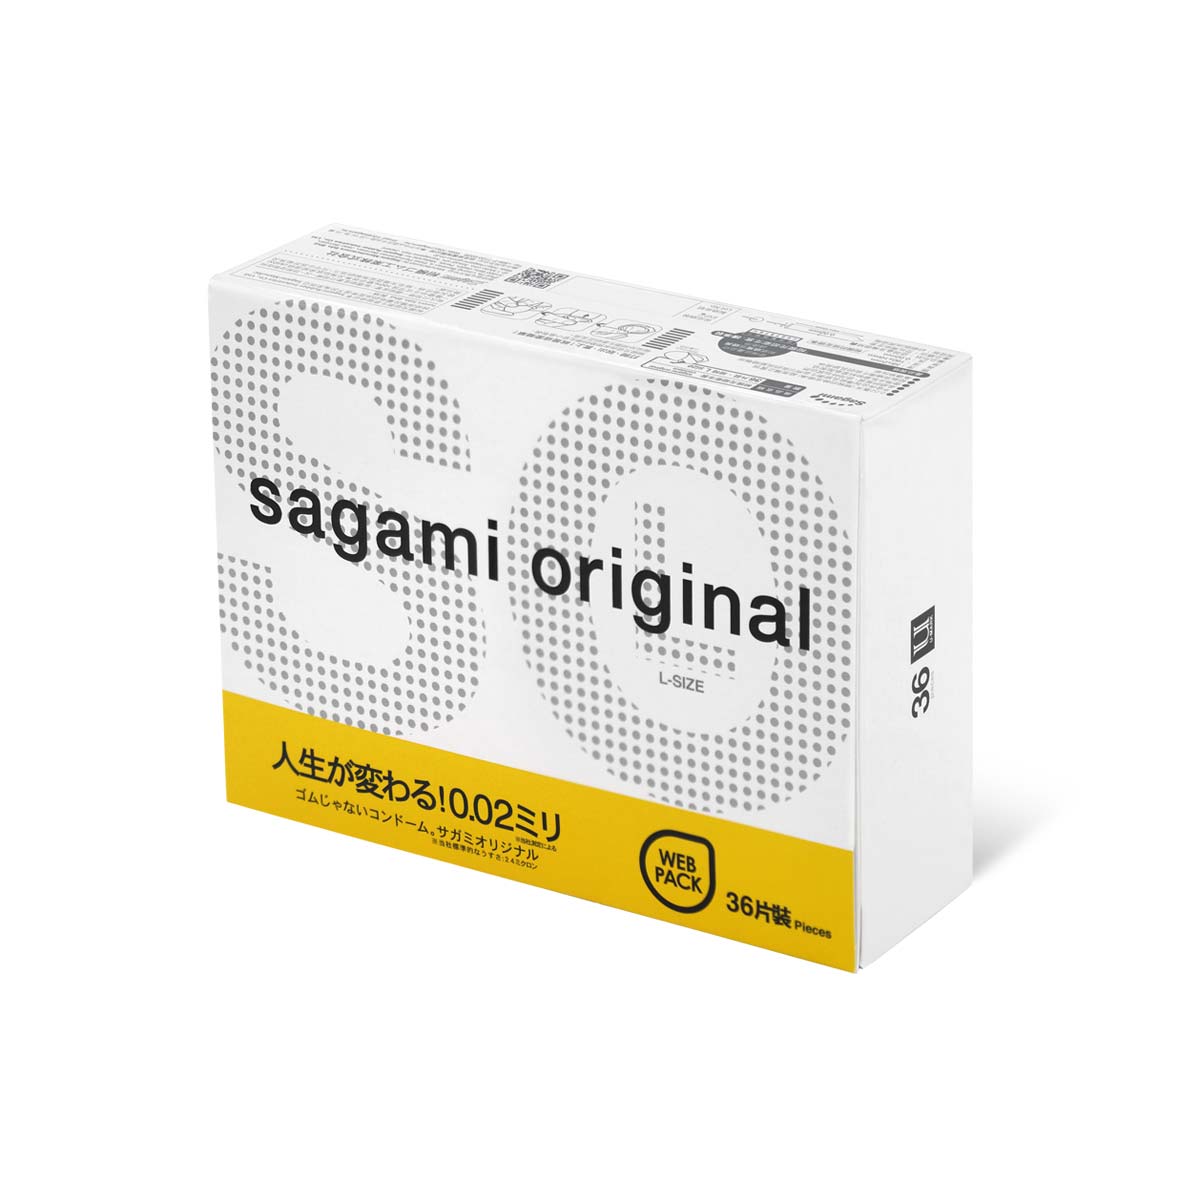 Sagami Original 0.02 L-size 58mm 36's Pack PU Condom (Defective Packaging)-p_1